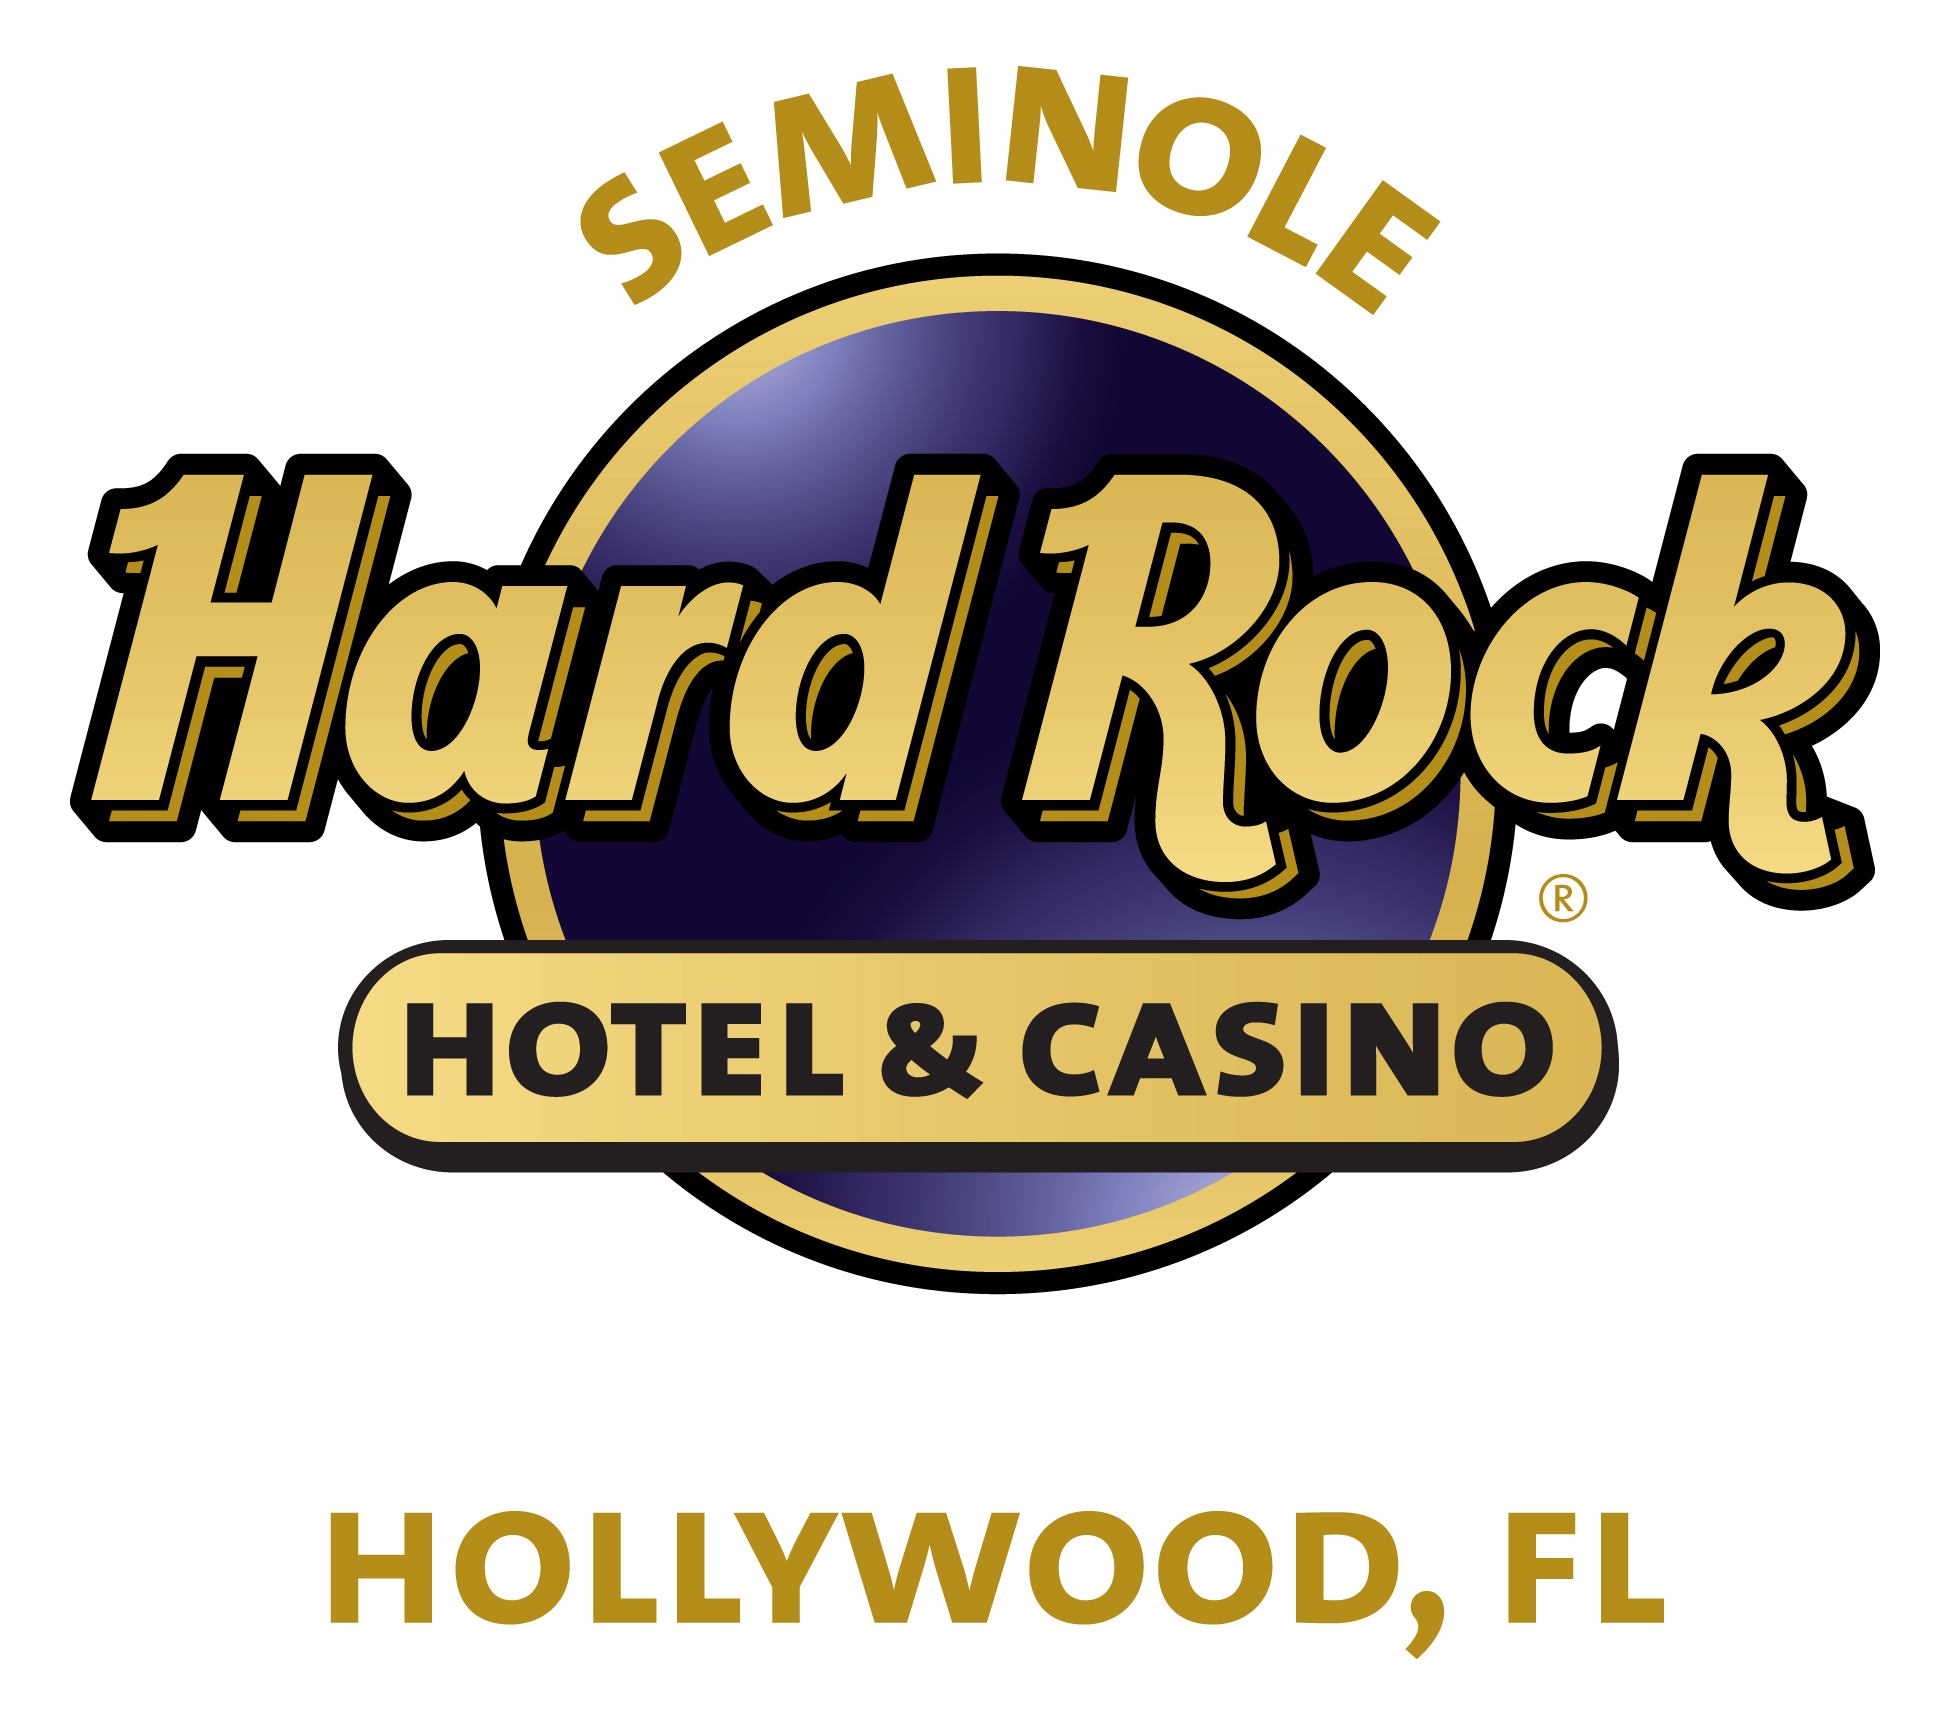 the seminole hard rock hotel casino